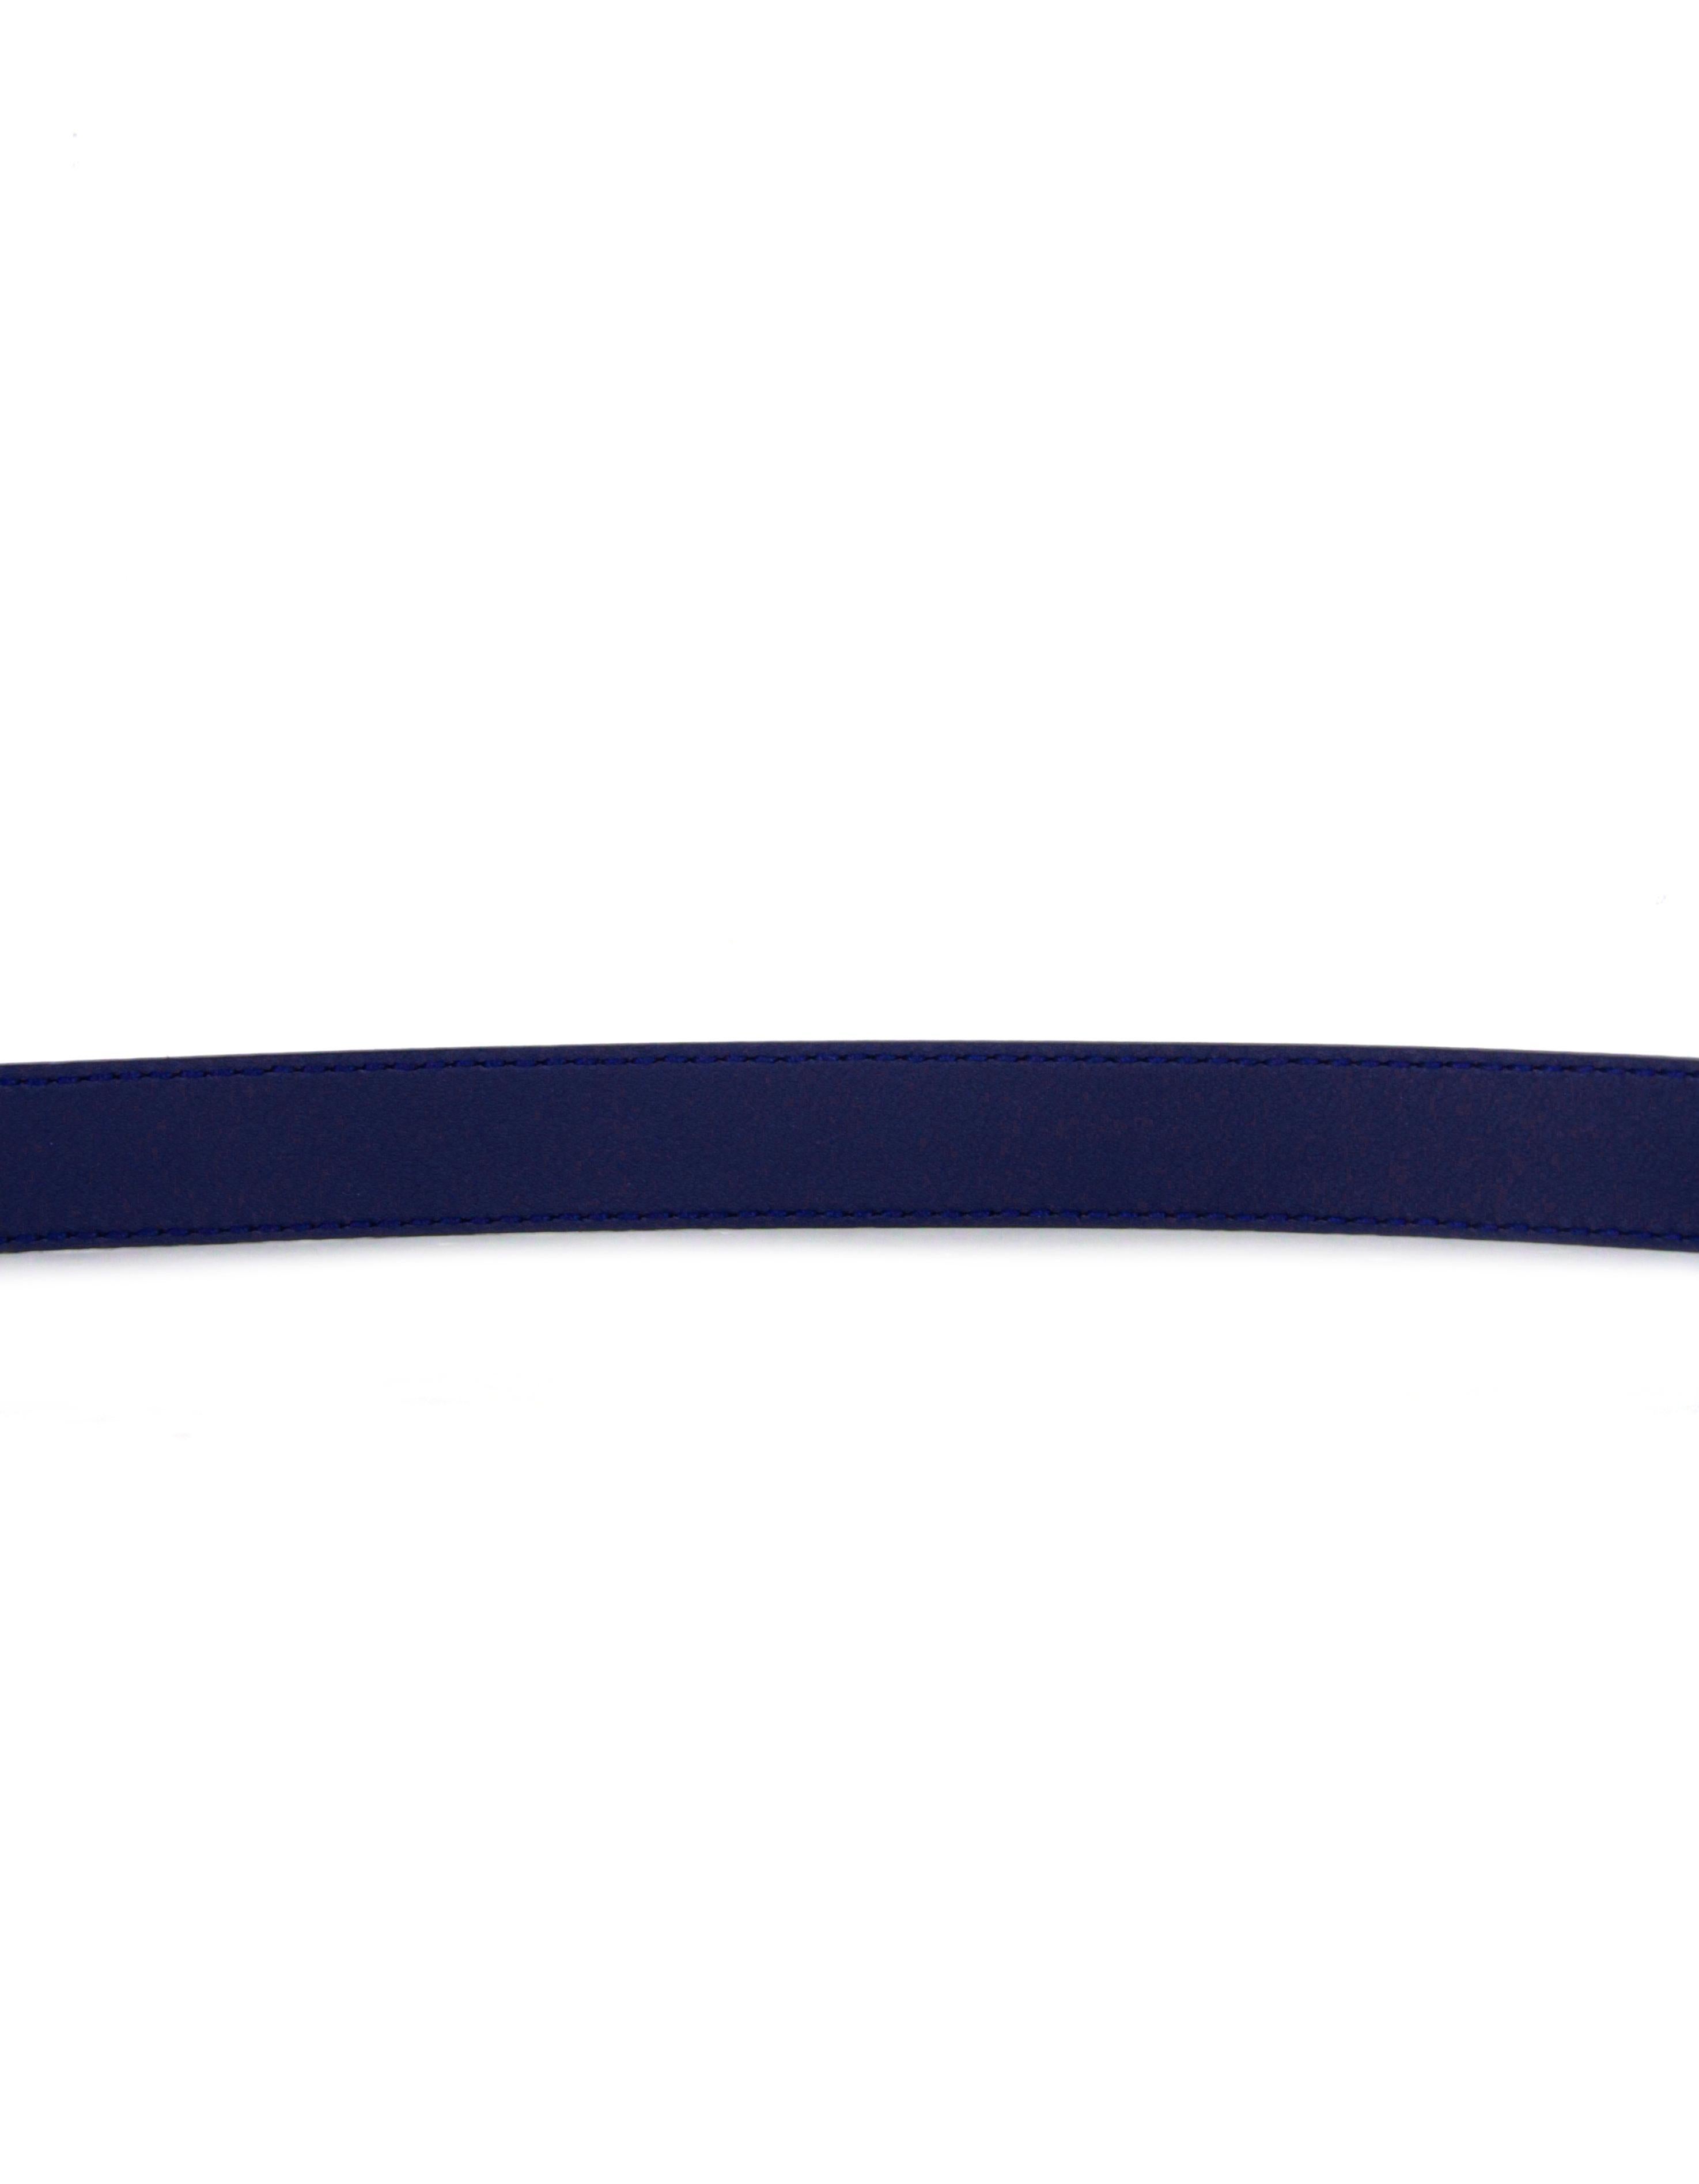 Black Gucci NWT Blue/Red/White Thin Marmont GG Logo Belt sz 95/38